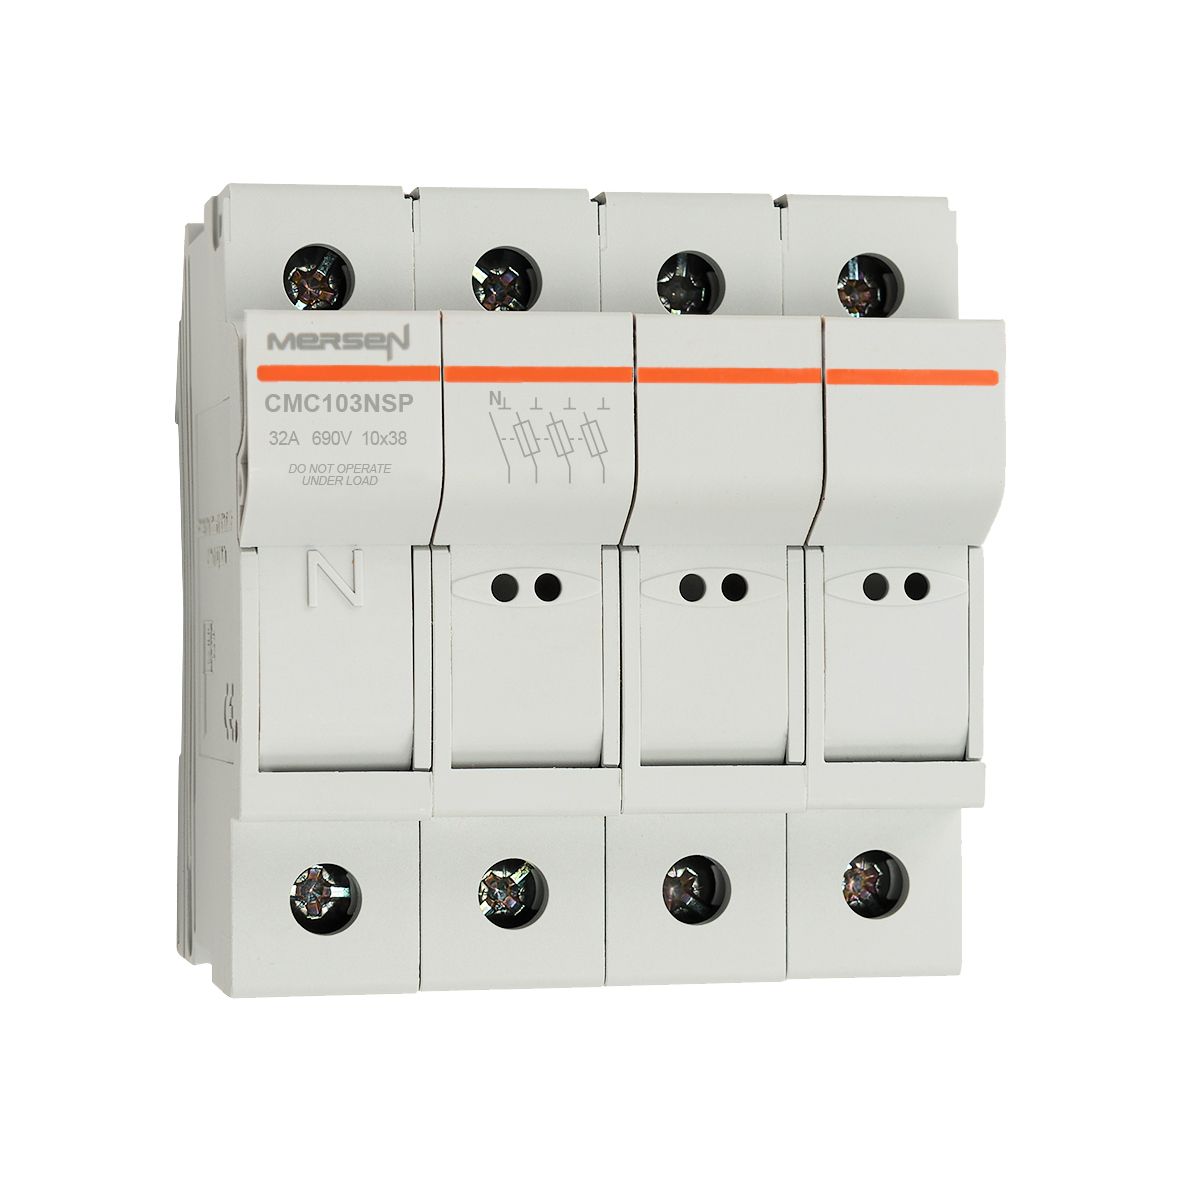 F1062766 - modular fuse holder, IEC, 3P+N, 10x38, DIN rail mounting, IP20